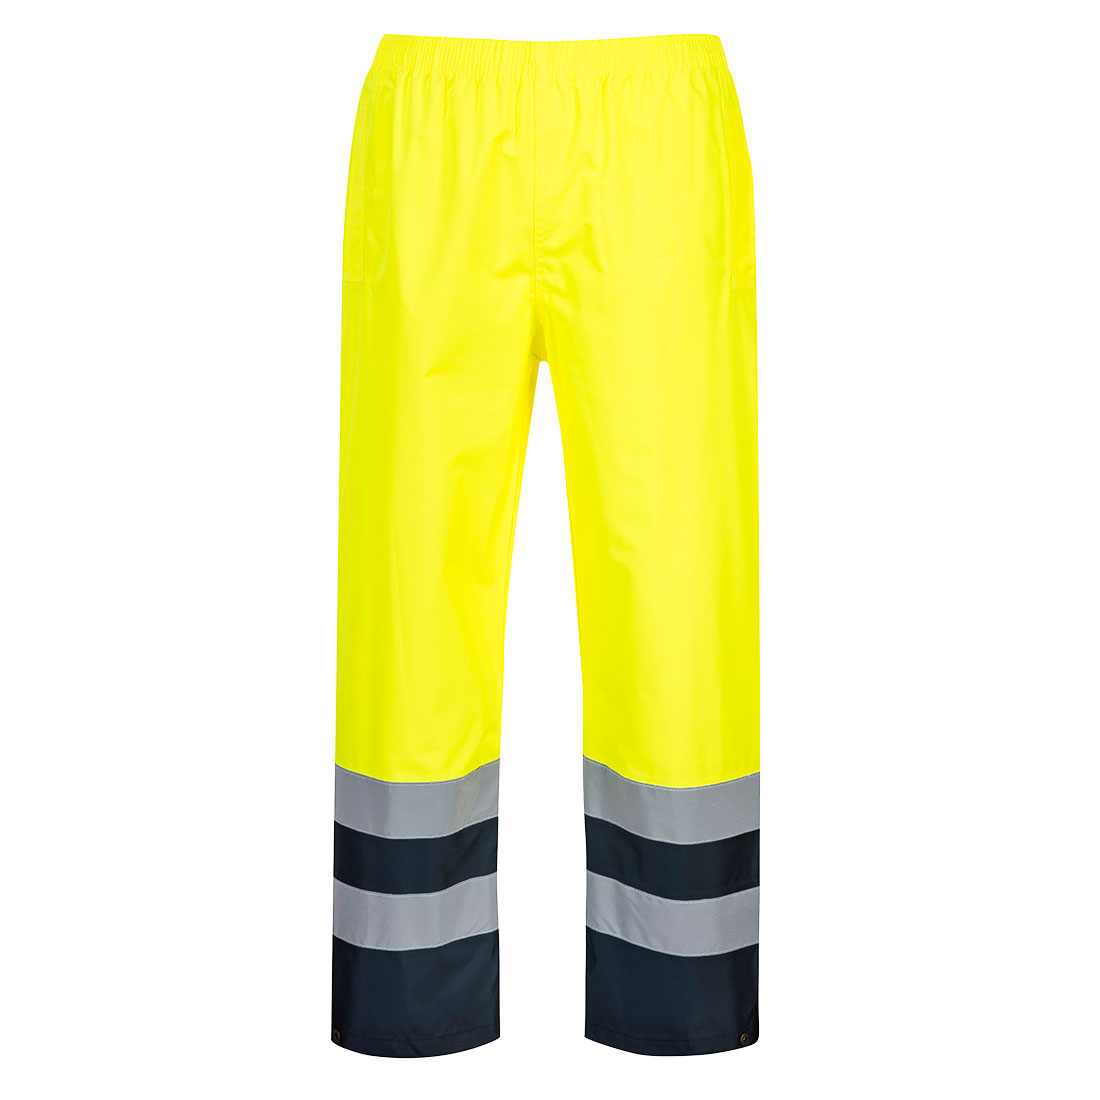 S486 - Dvoubarevné kalhoty Hi-Vis Traffic Velikost: S, Barva: žlutá/tm.modrá